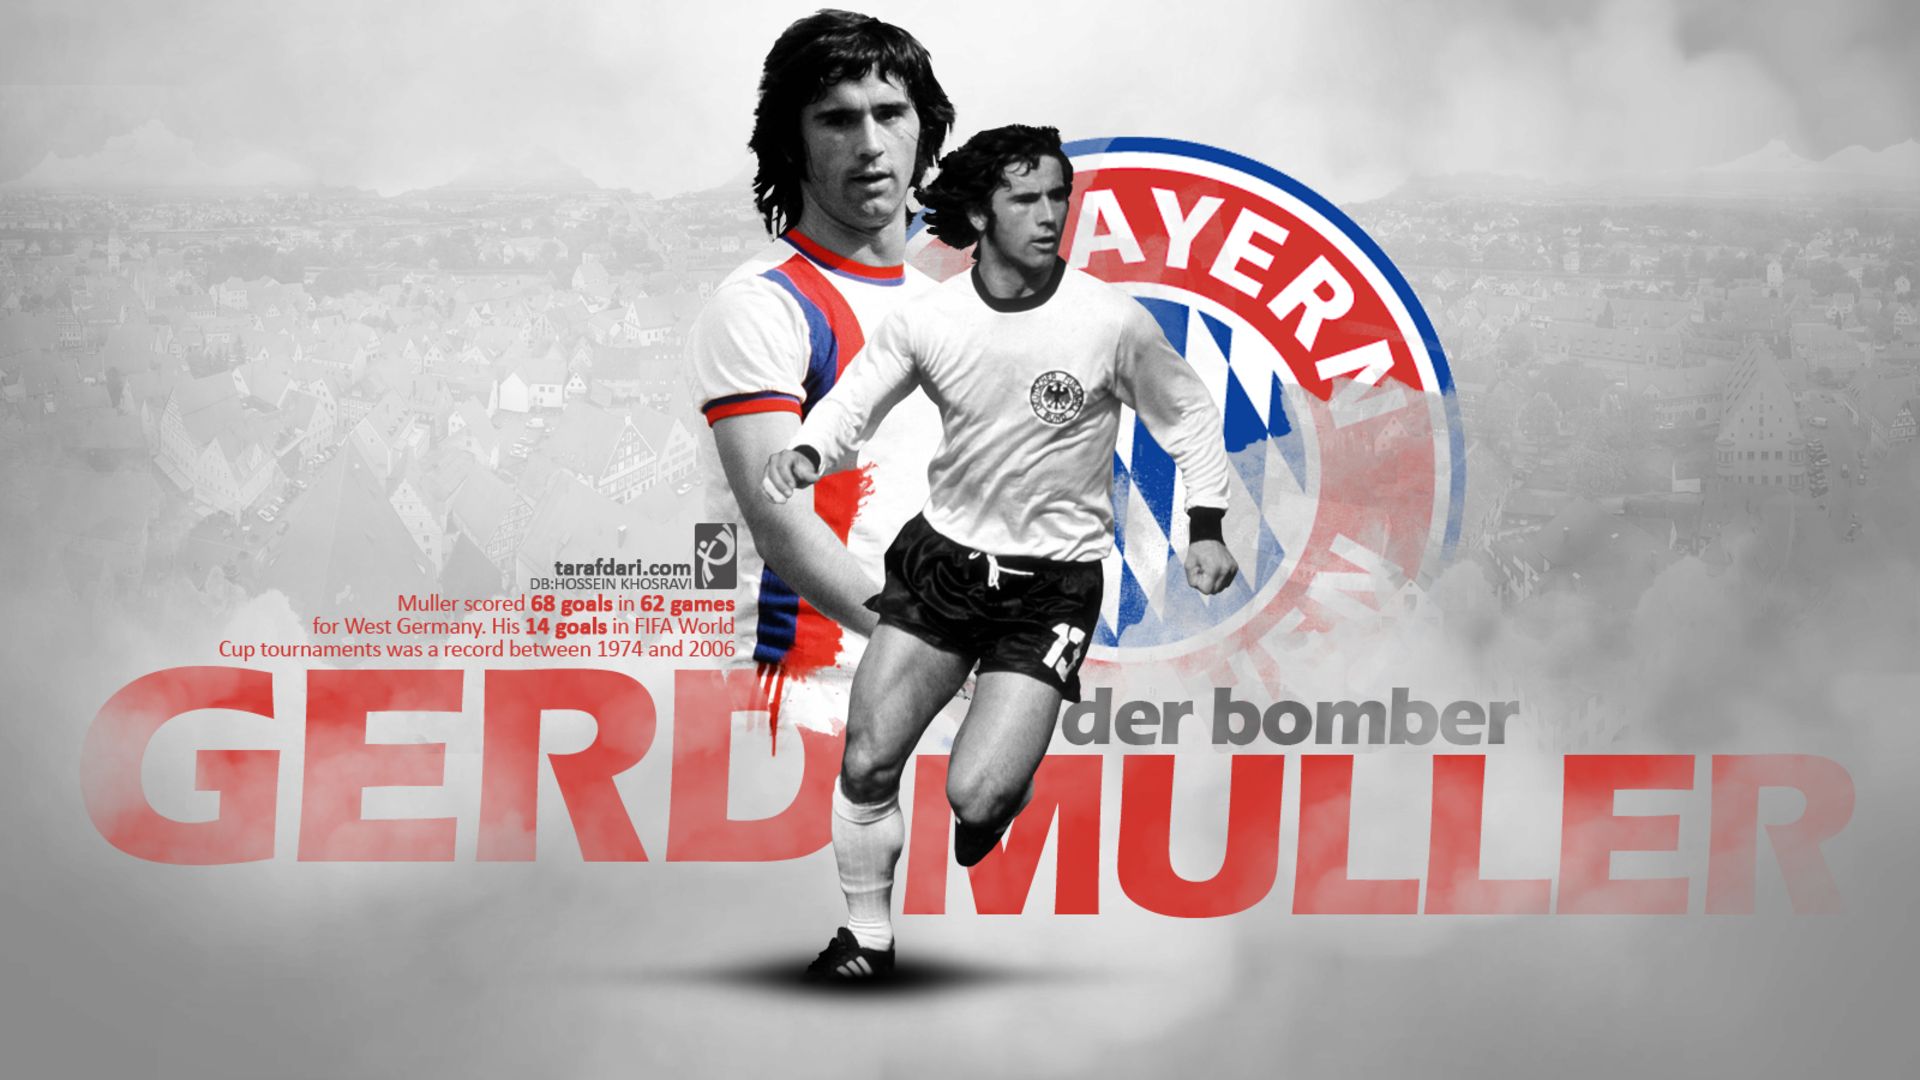 Download Gerd Muller And Robert Lewandowski Goals Wallpaper | Wallpapers.com